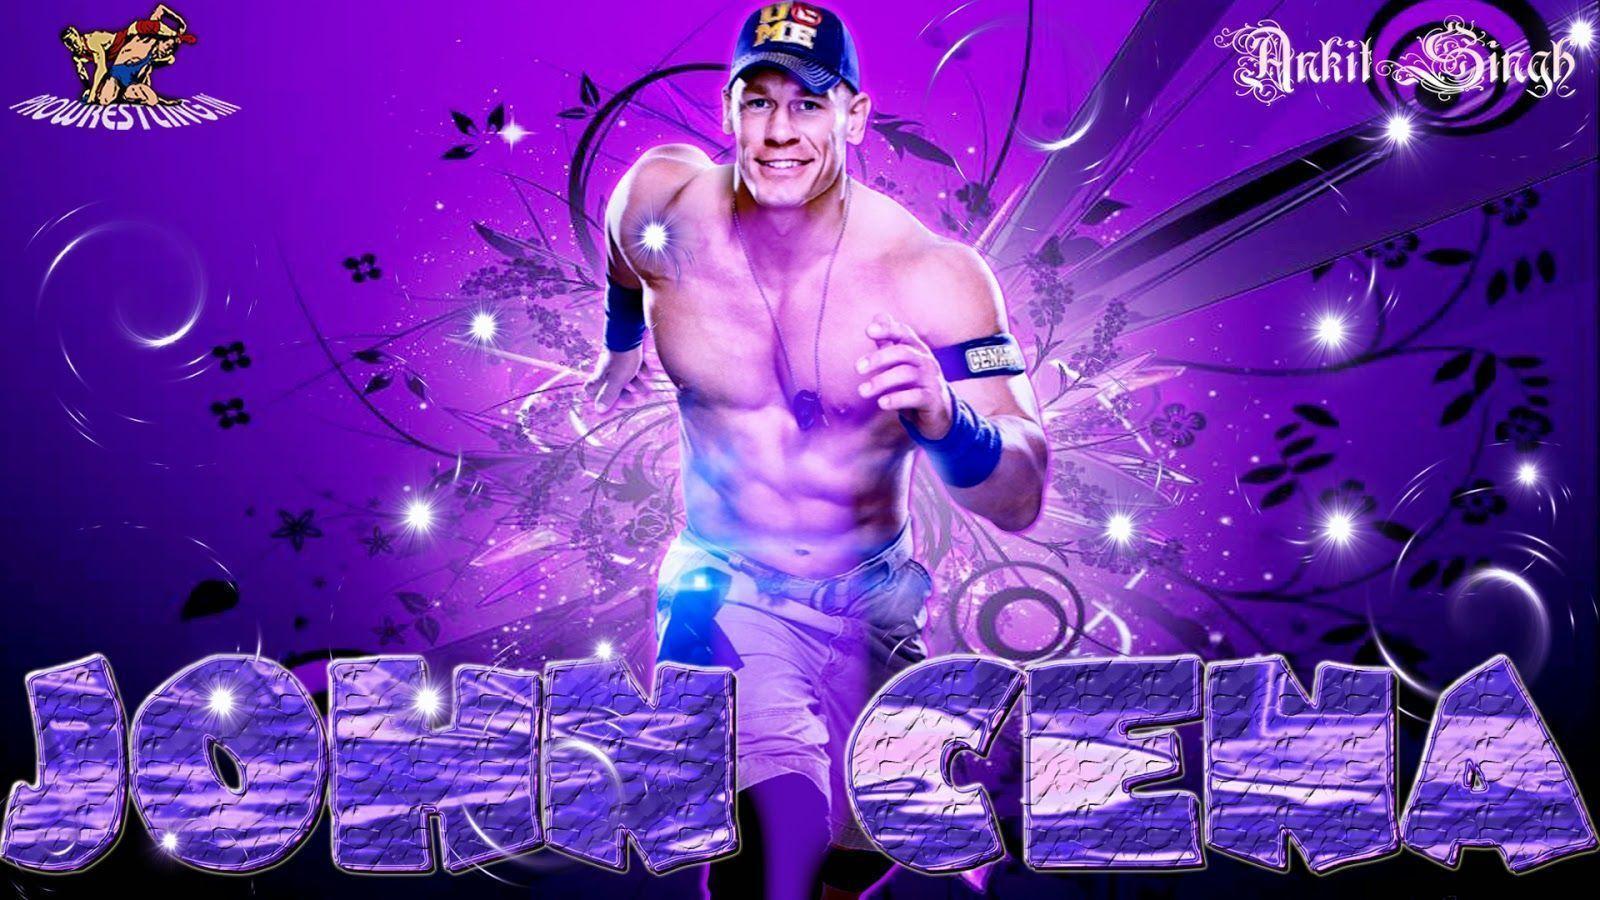 John Cena New HD Wallpaper and Background